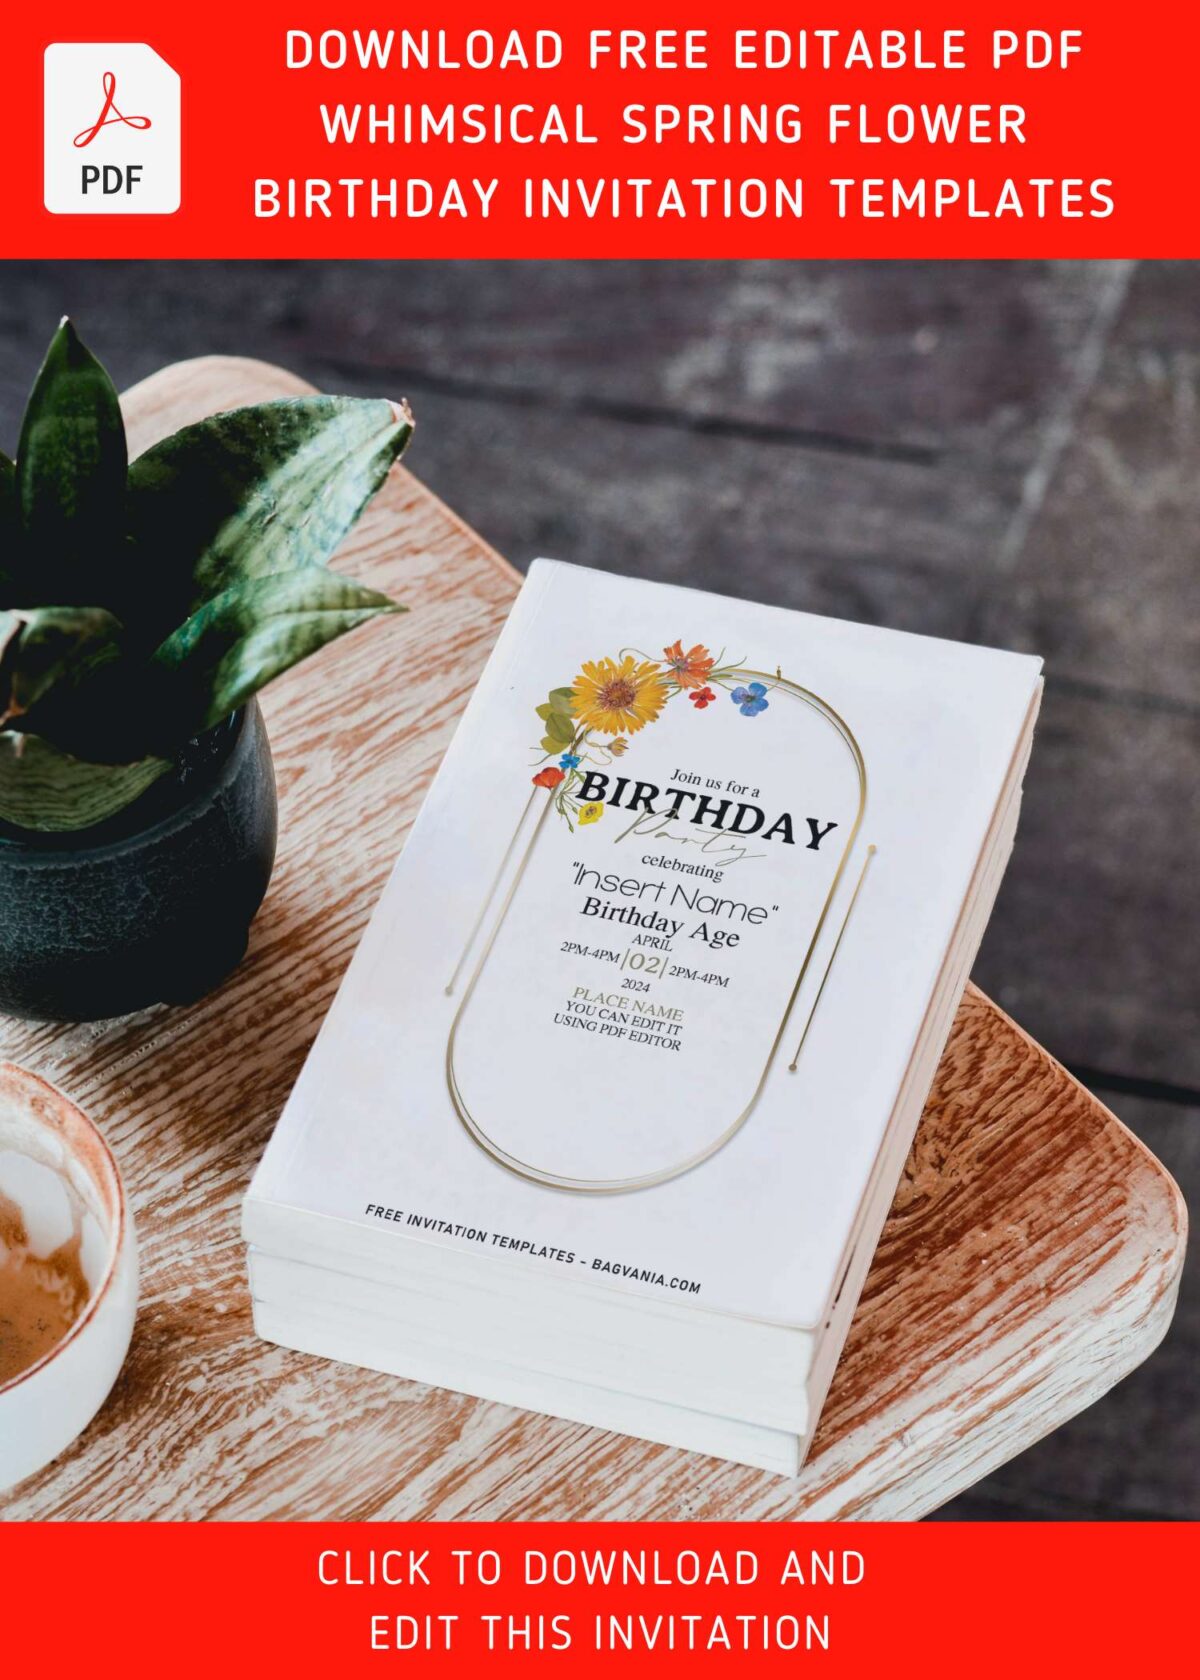 (Free Editable PDF) Whimsical Spring Birthday Invitation Templates with elegant script